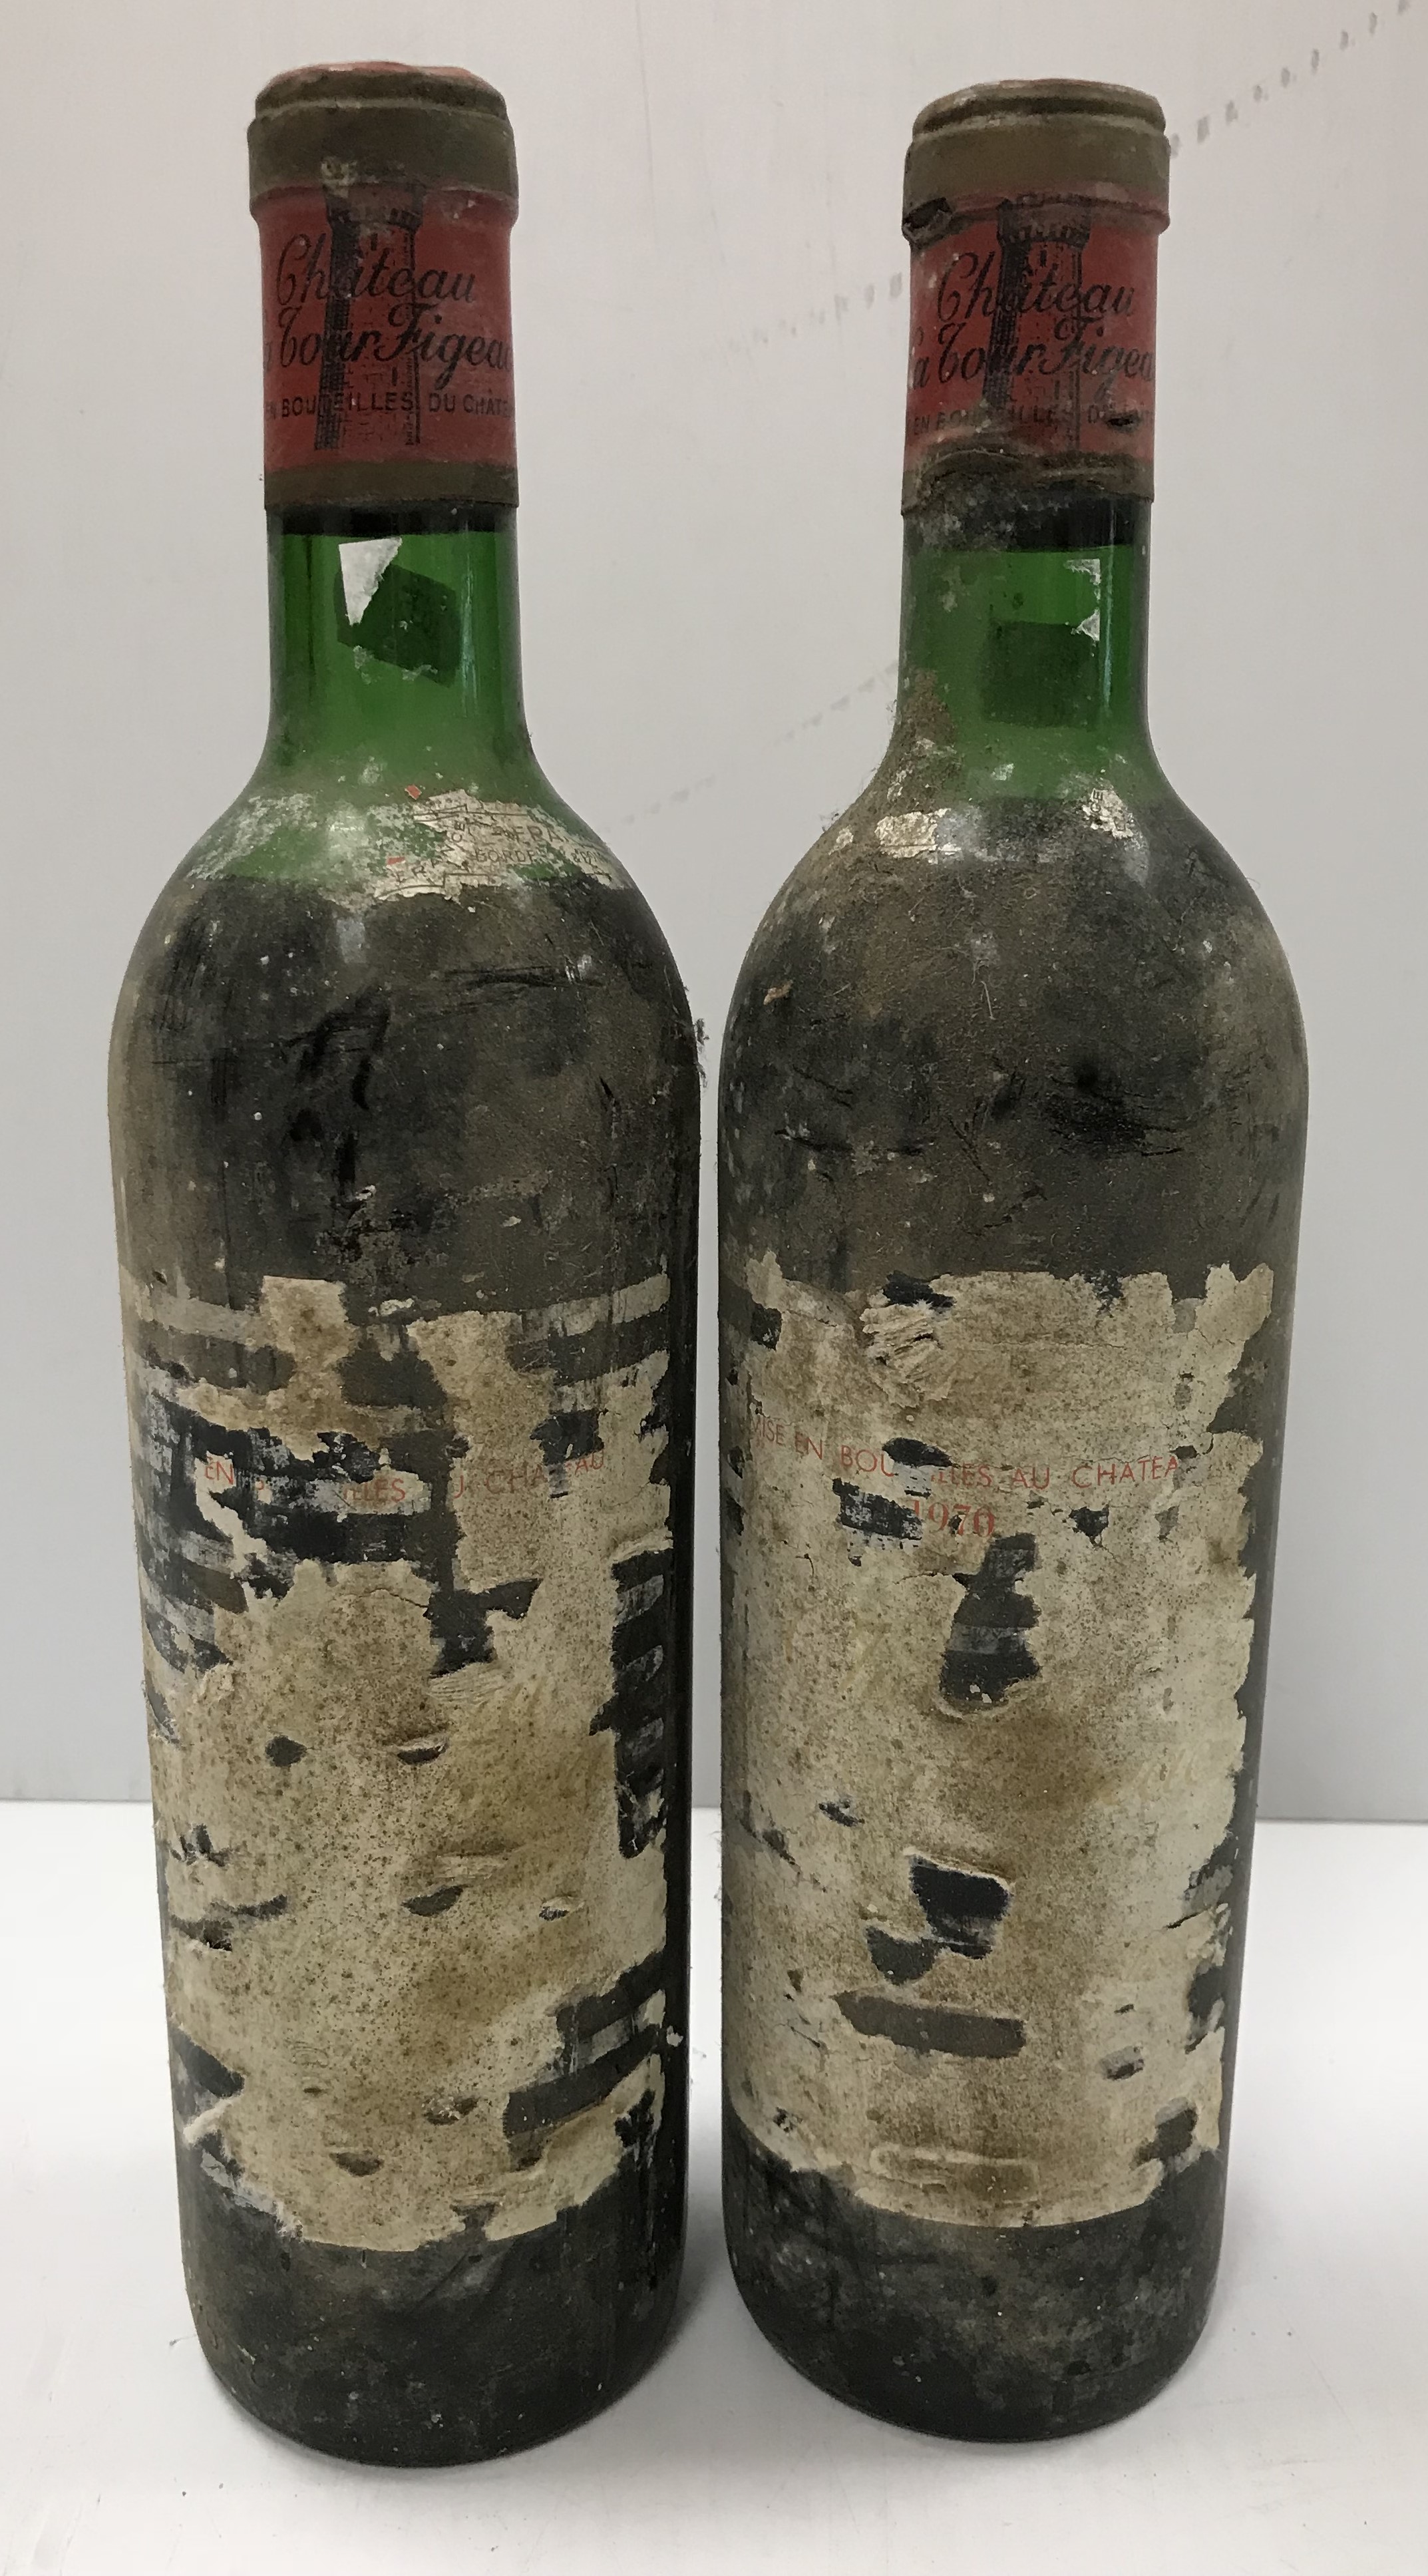 Two bottles Chateau Latour Figeac 1970